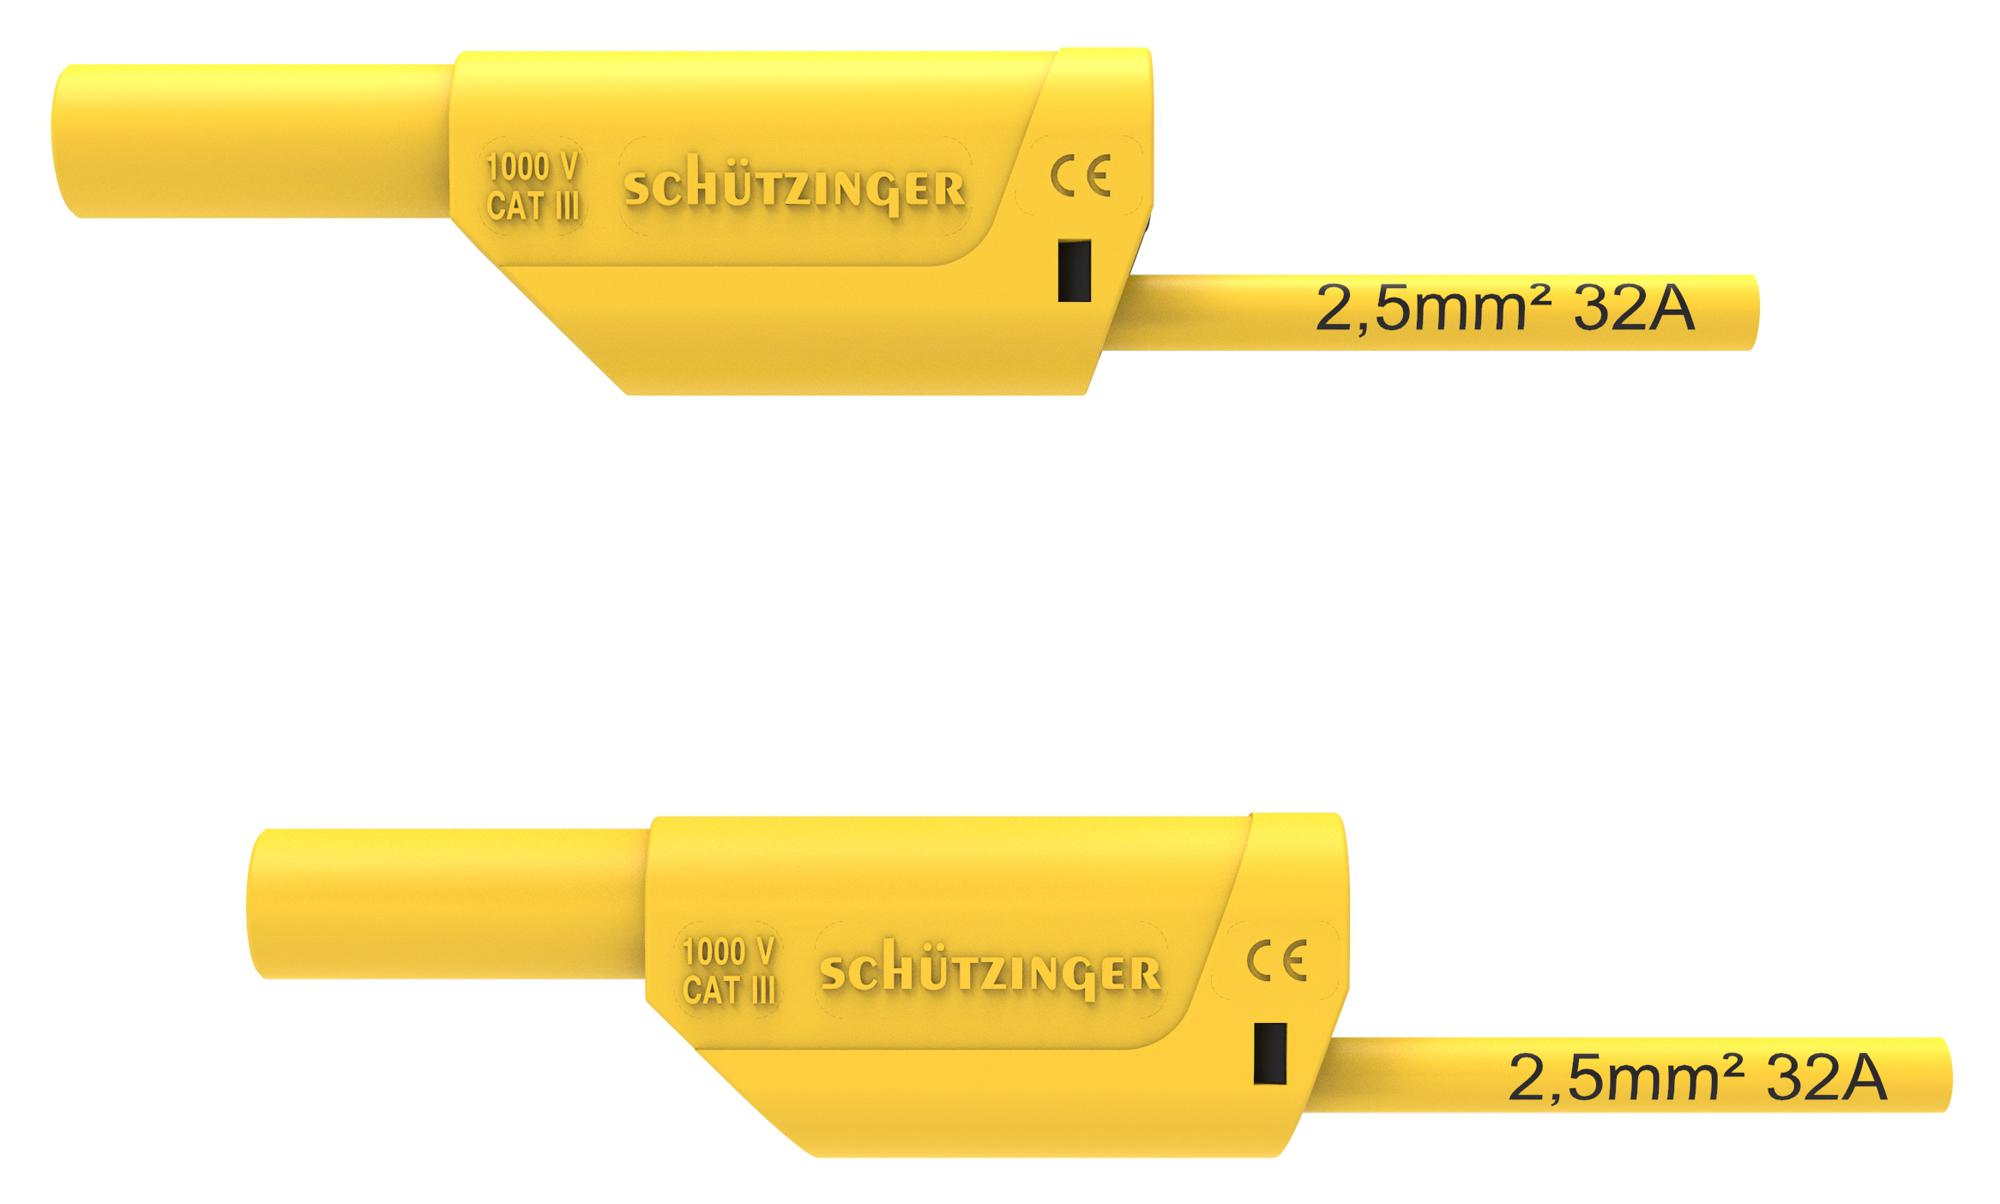 Schutzinger Di Vsfk 8700 / 2.5 / 100 / Ge 4mm Banana Plug-Sq, Shrouded, Yellow, 1M